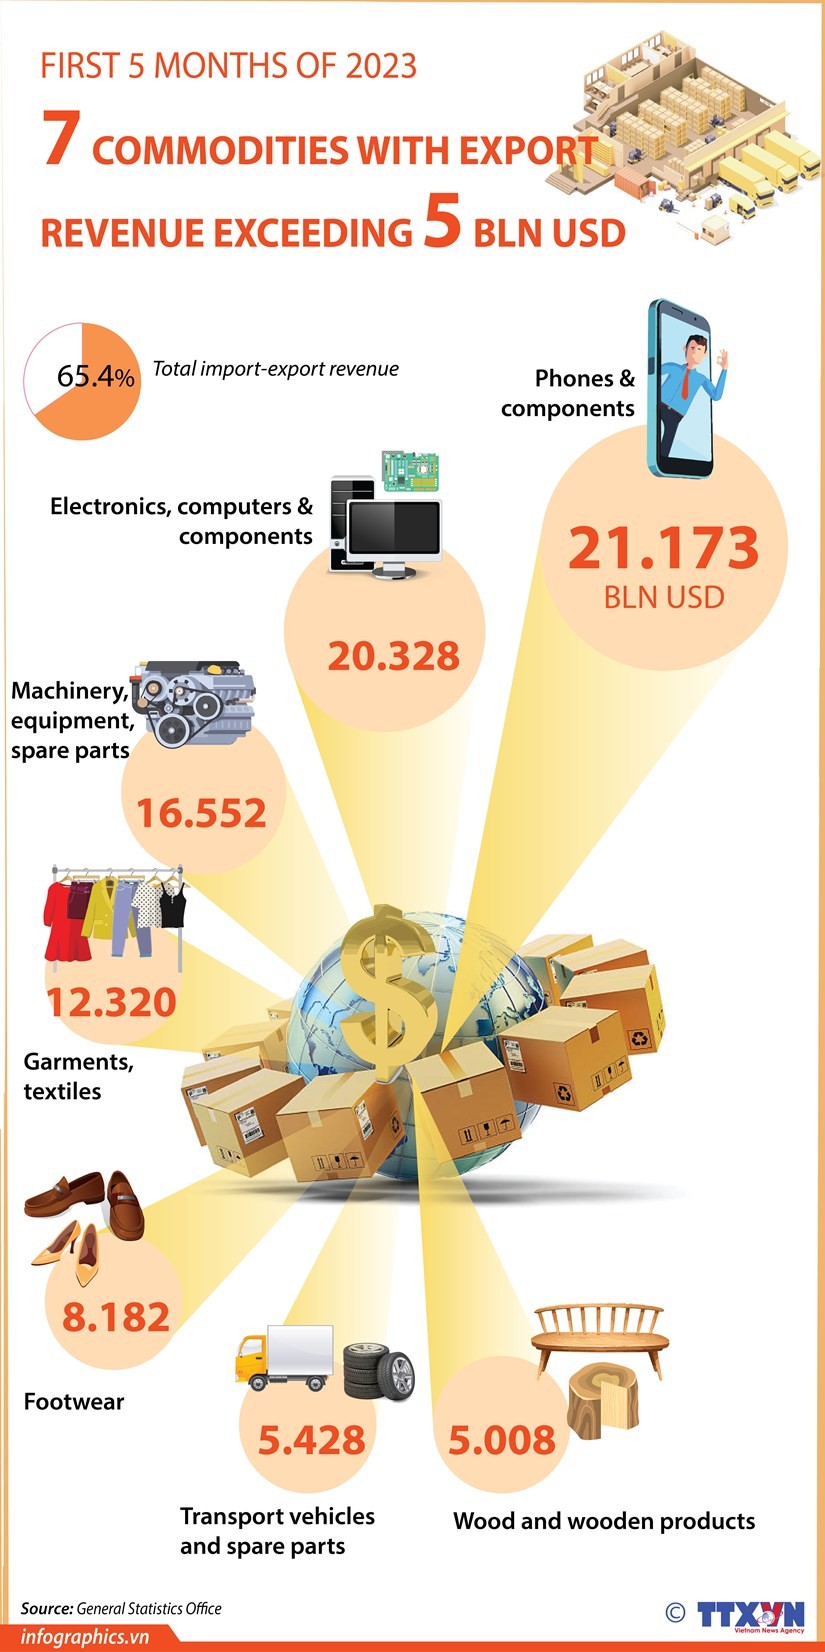 Seven commodities post export revenue of over 5 billion USD